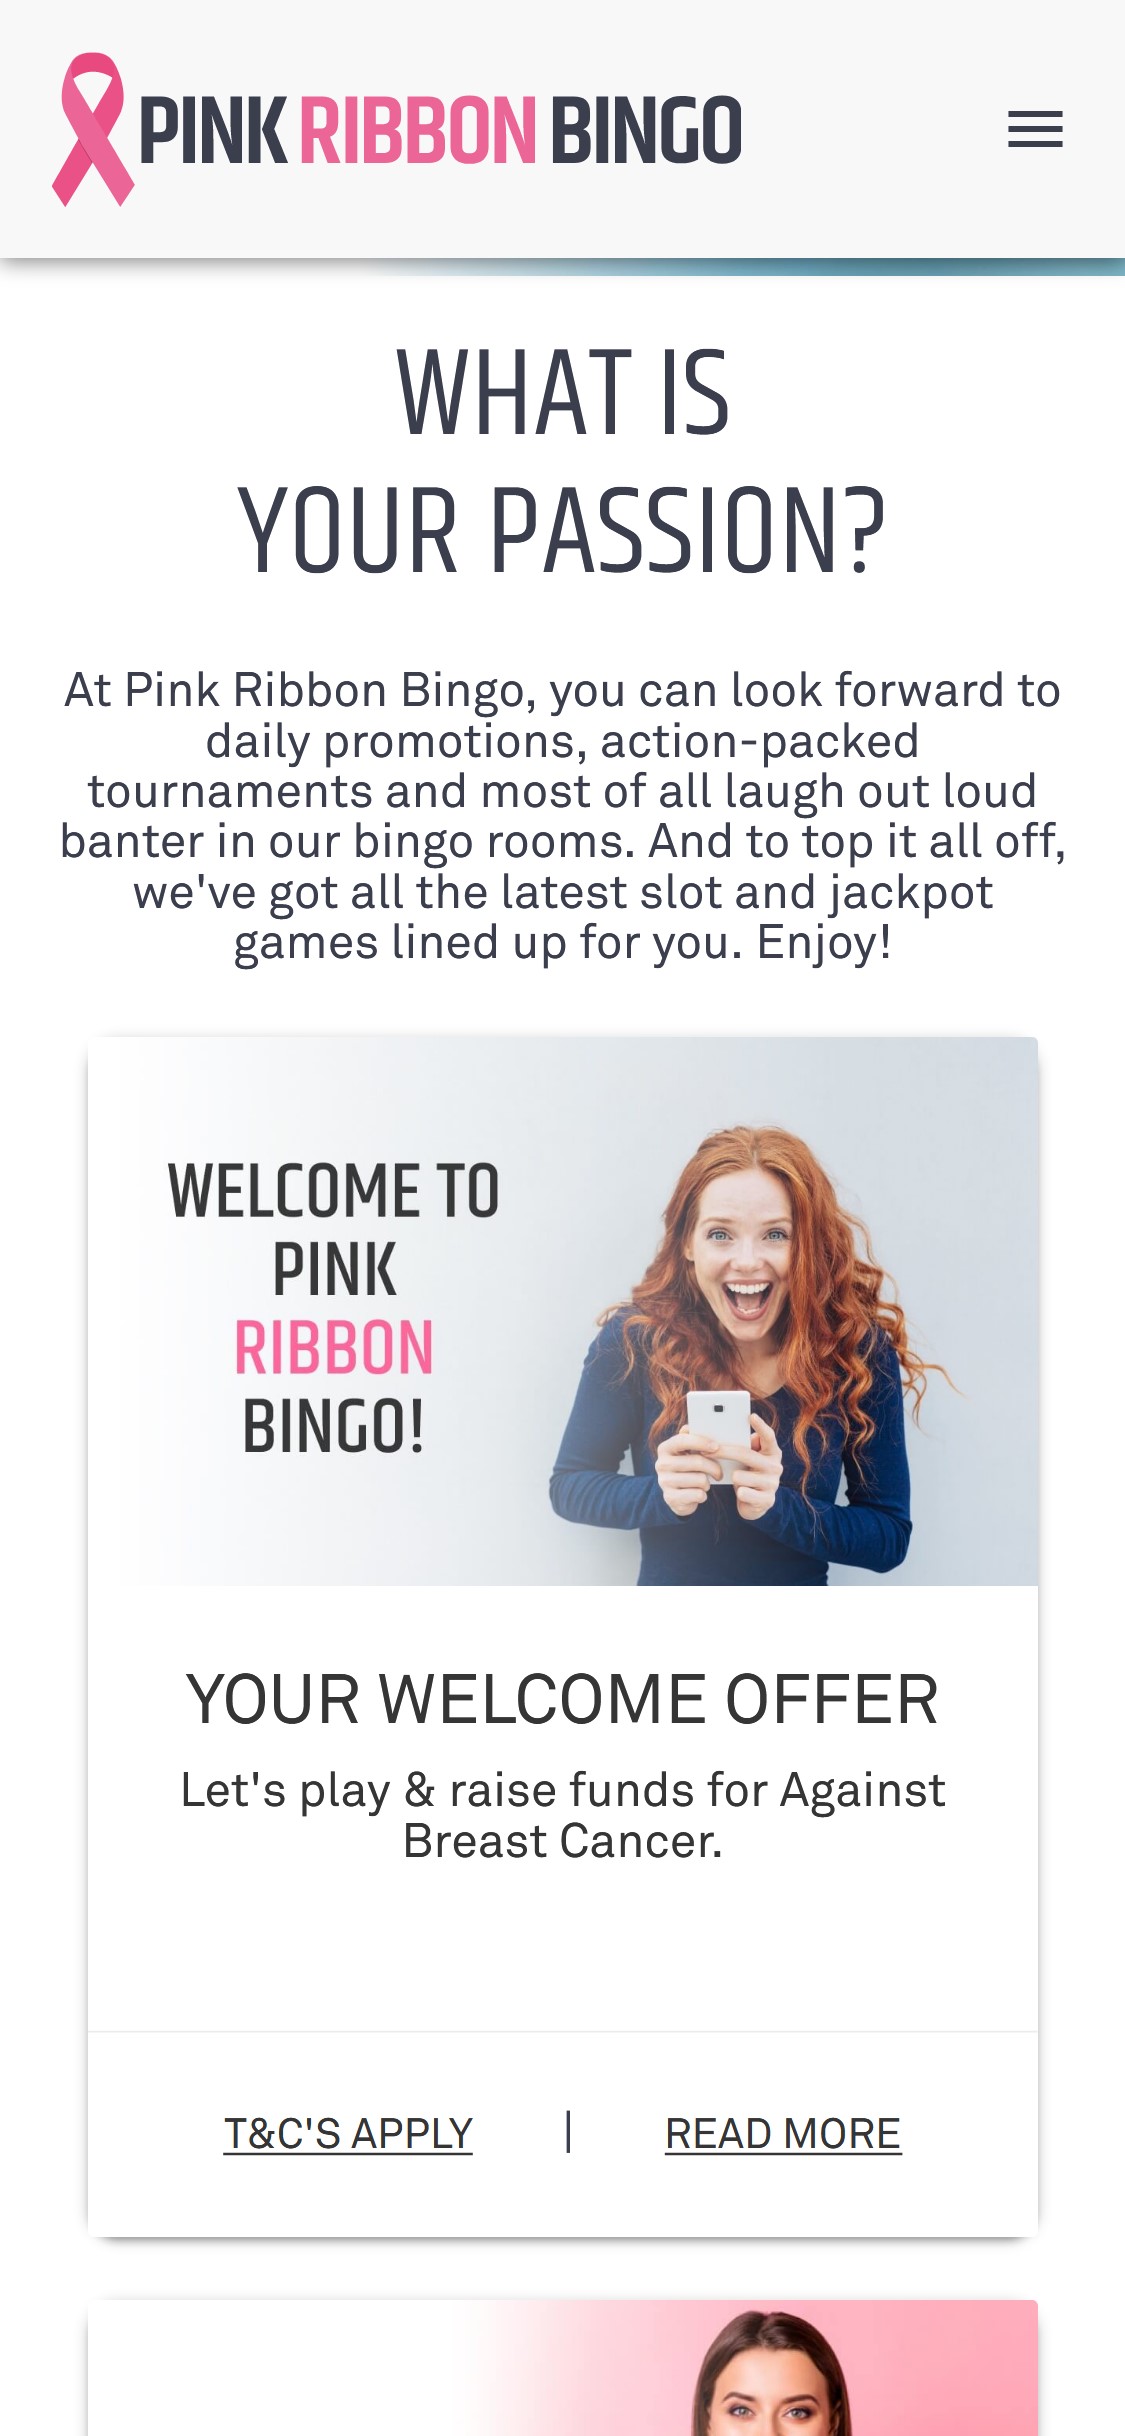 Pink Ribbon Bingo Casino Mobile No Deposit Bonus Review